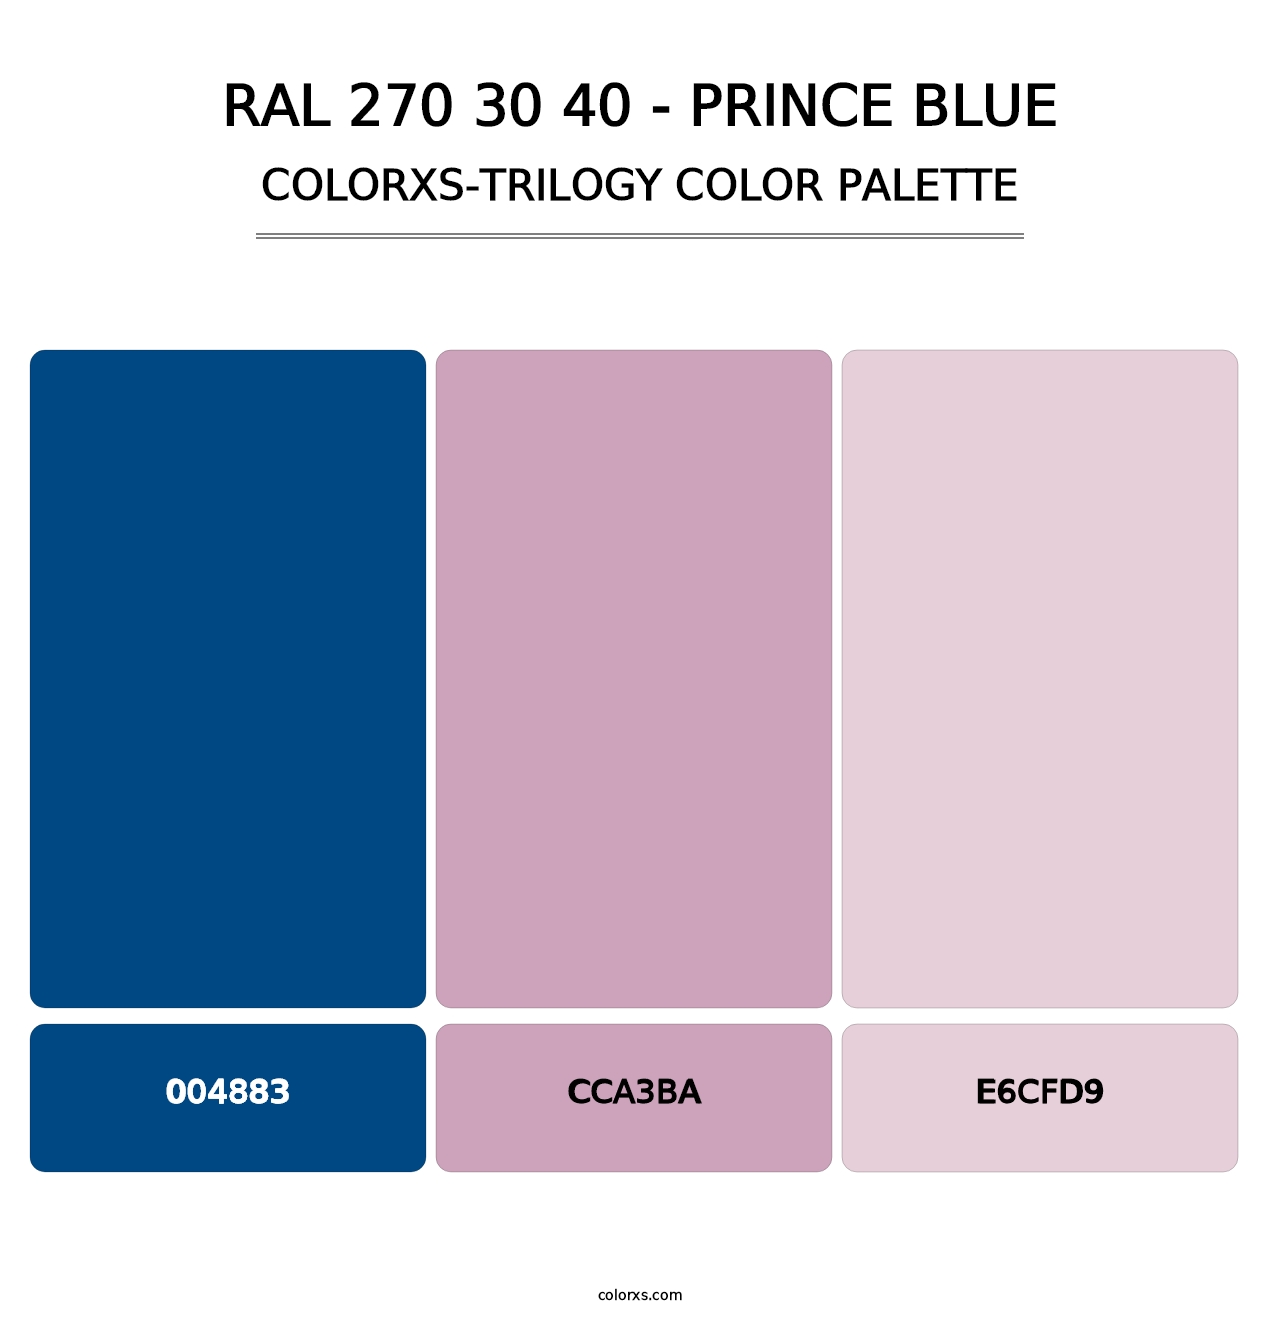 RAL 270 30 40 - Prince Blue - Colorxs Trilogy Palette